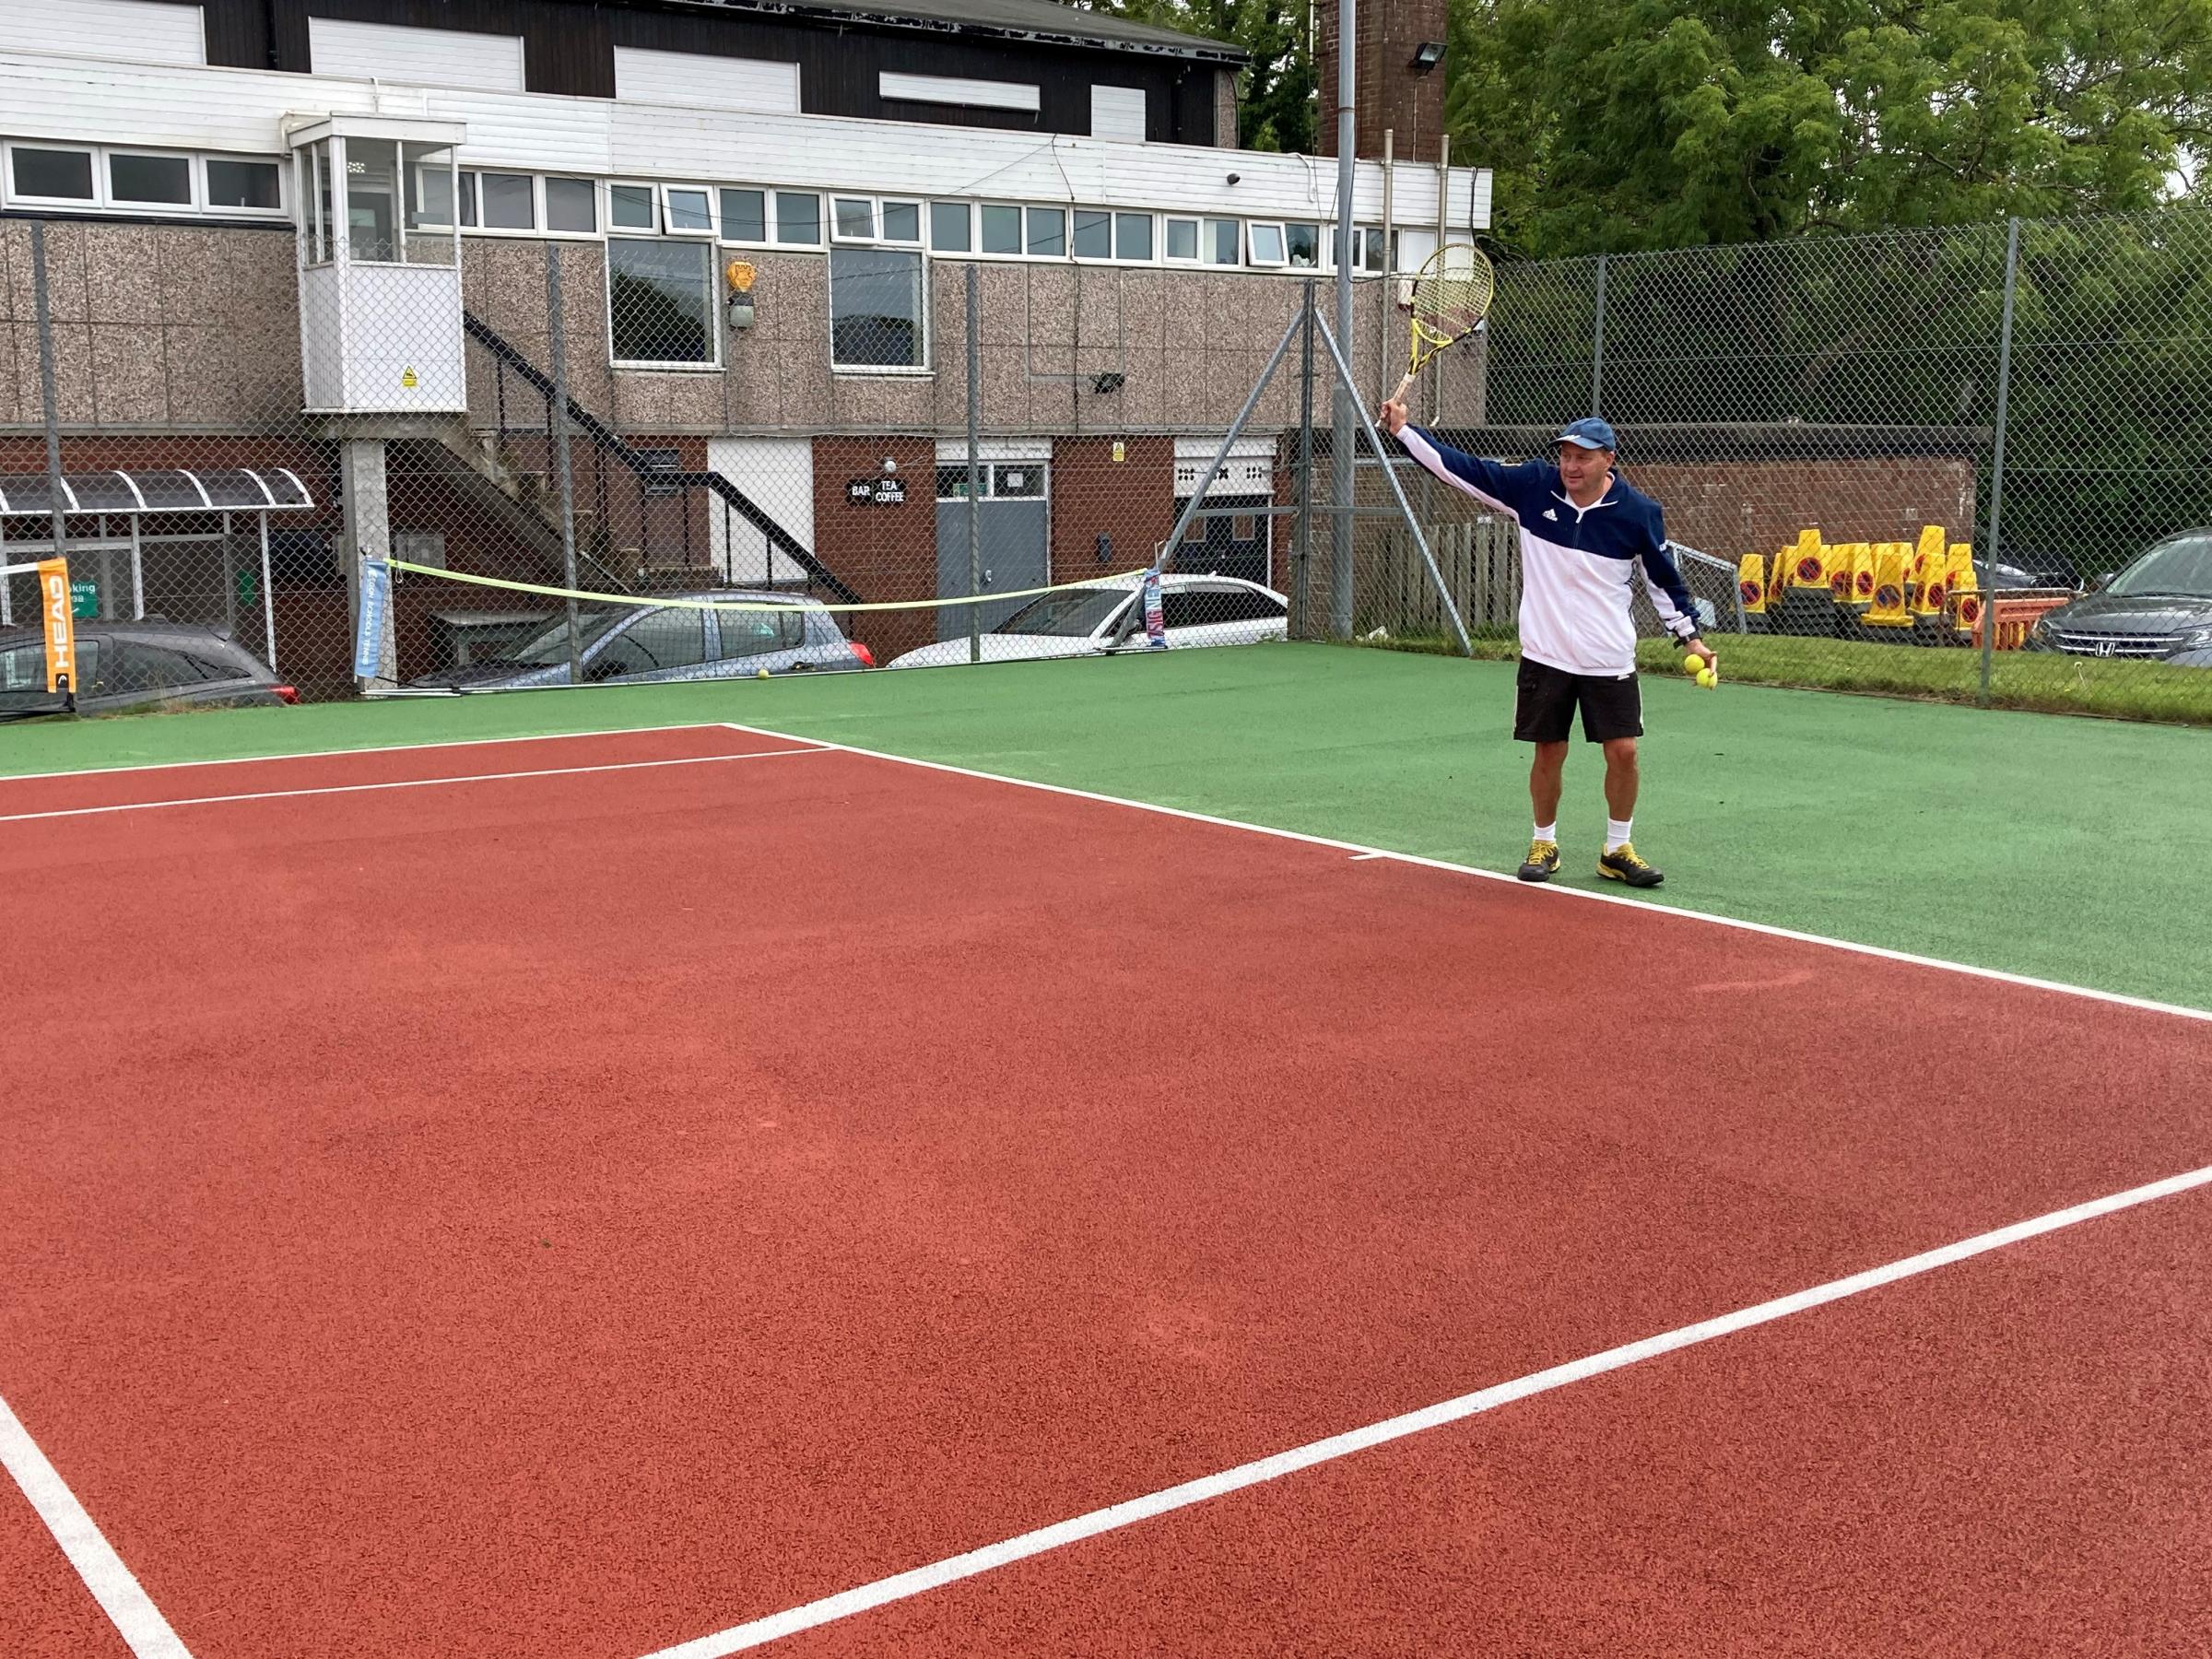 TEACHING: Head coach Stefan Jones on Hawcoat Park’s newly opened tennis courts